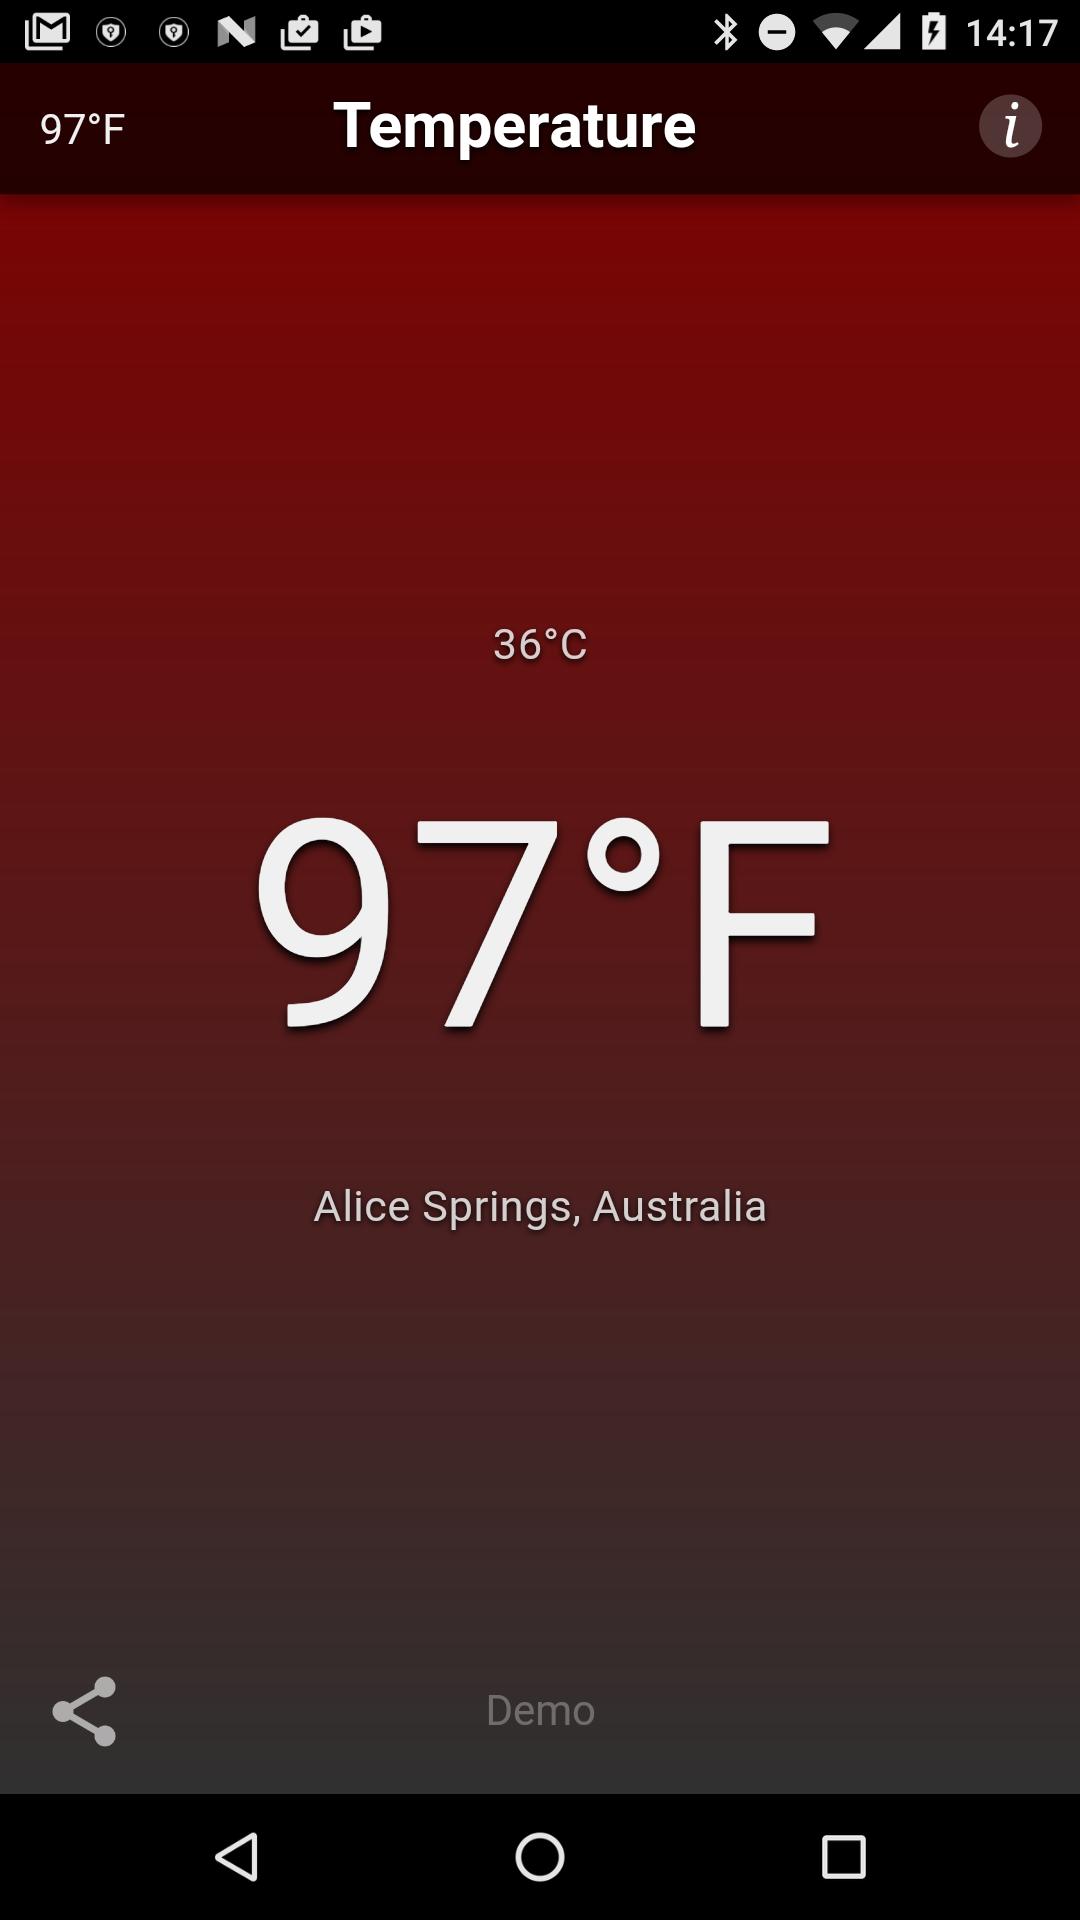 Temps download. -2 Температура скрин. Room temperature Android. Temperature Play.